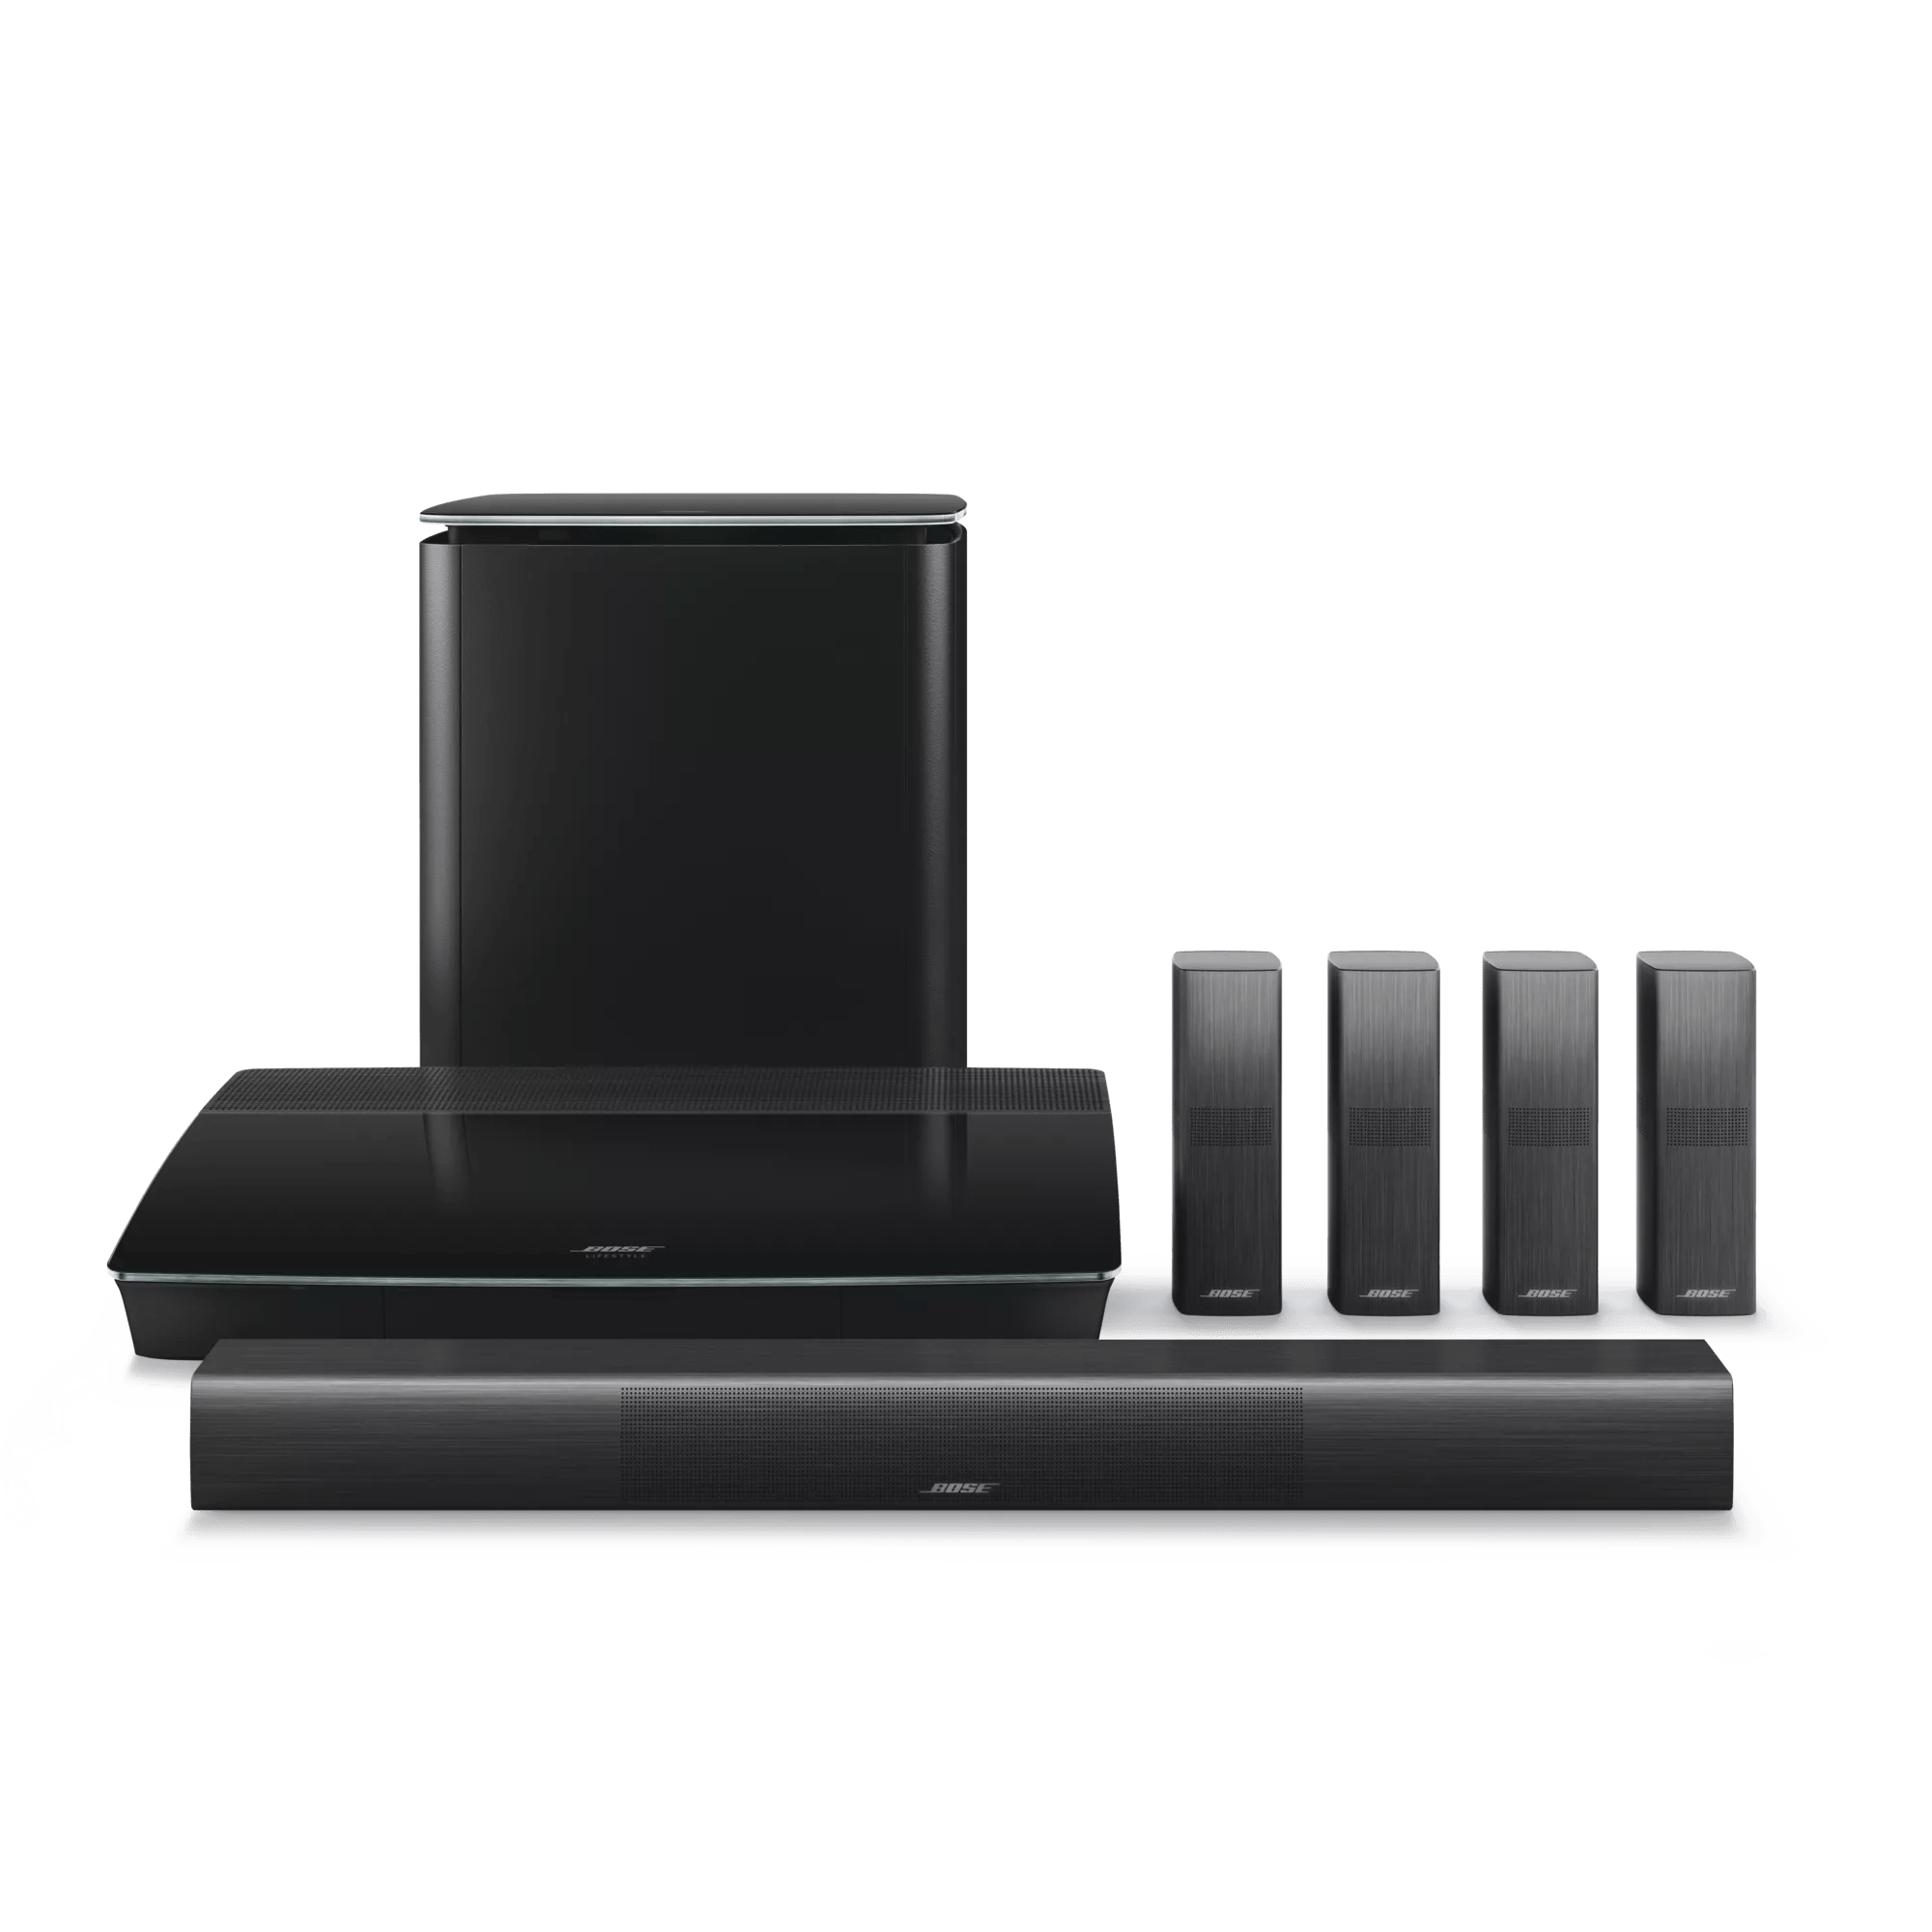 Lifestyle 650 home entertainment system - Black